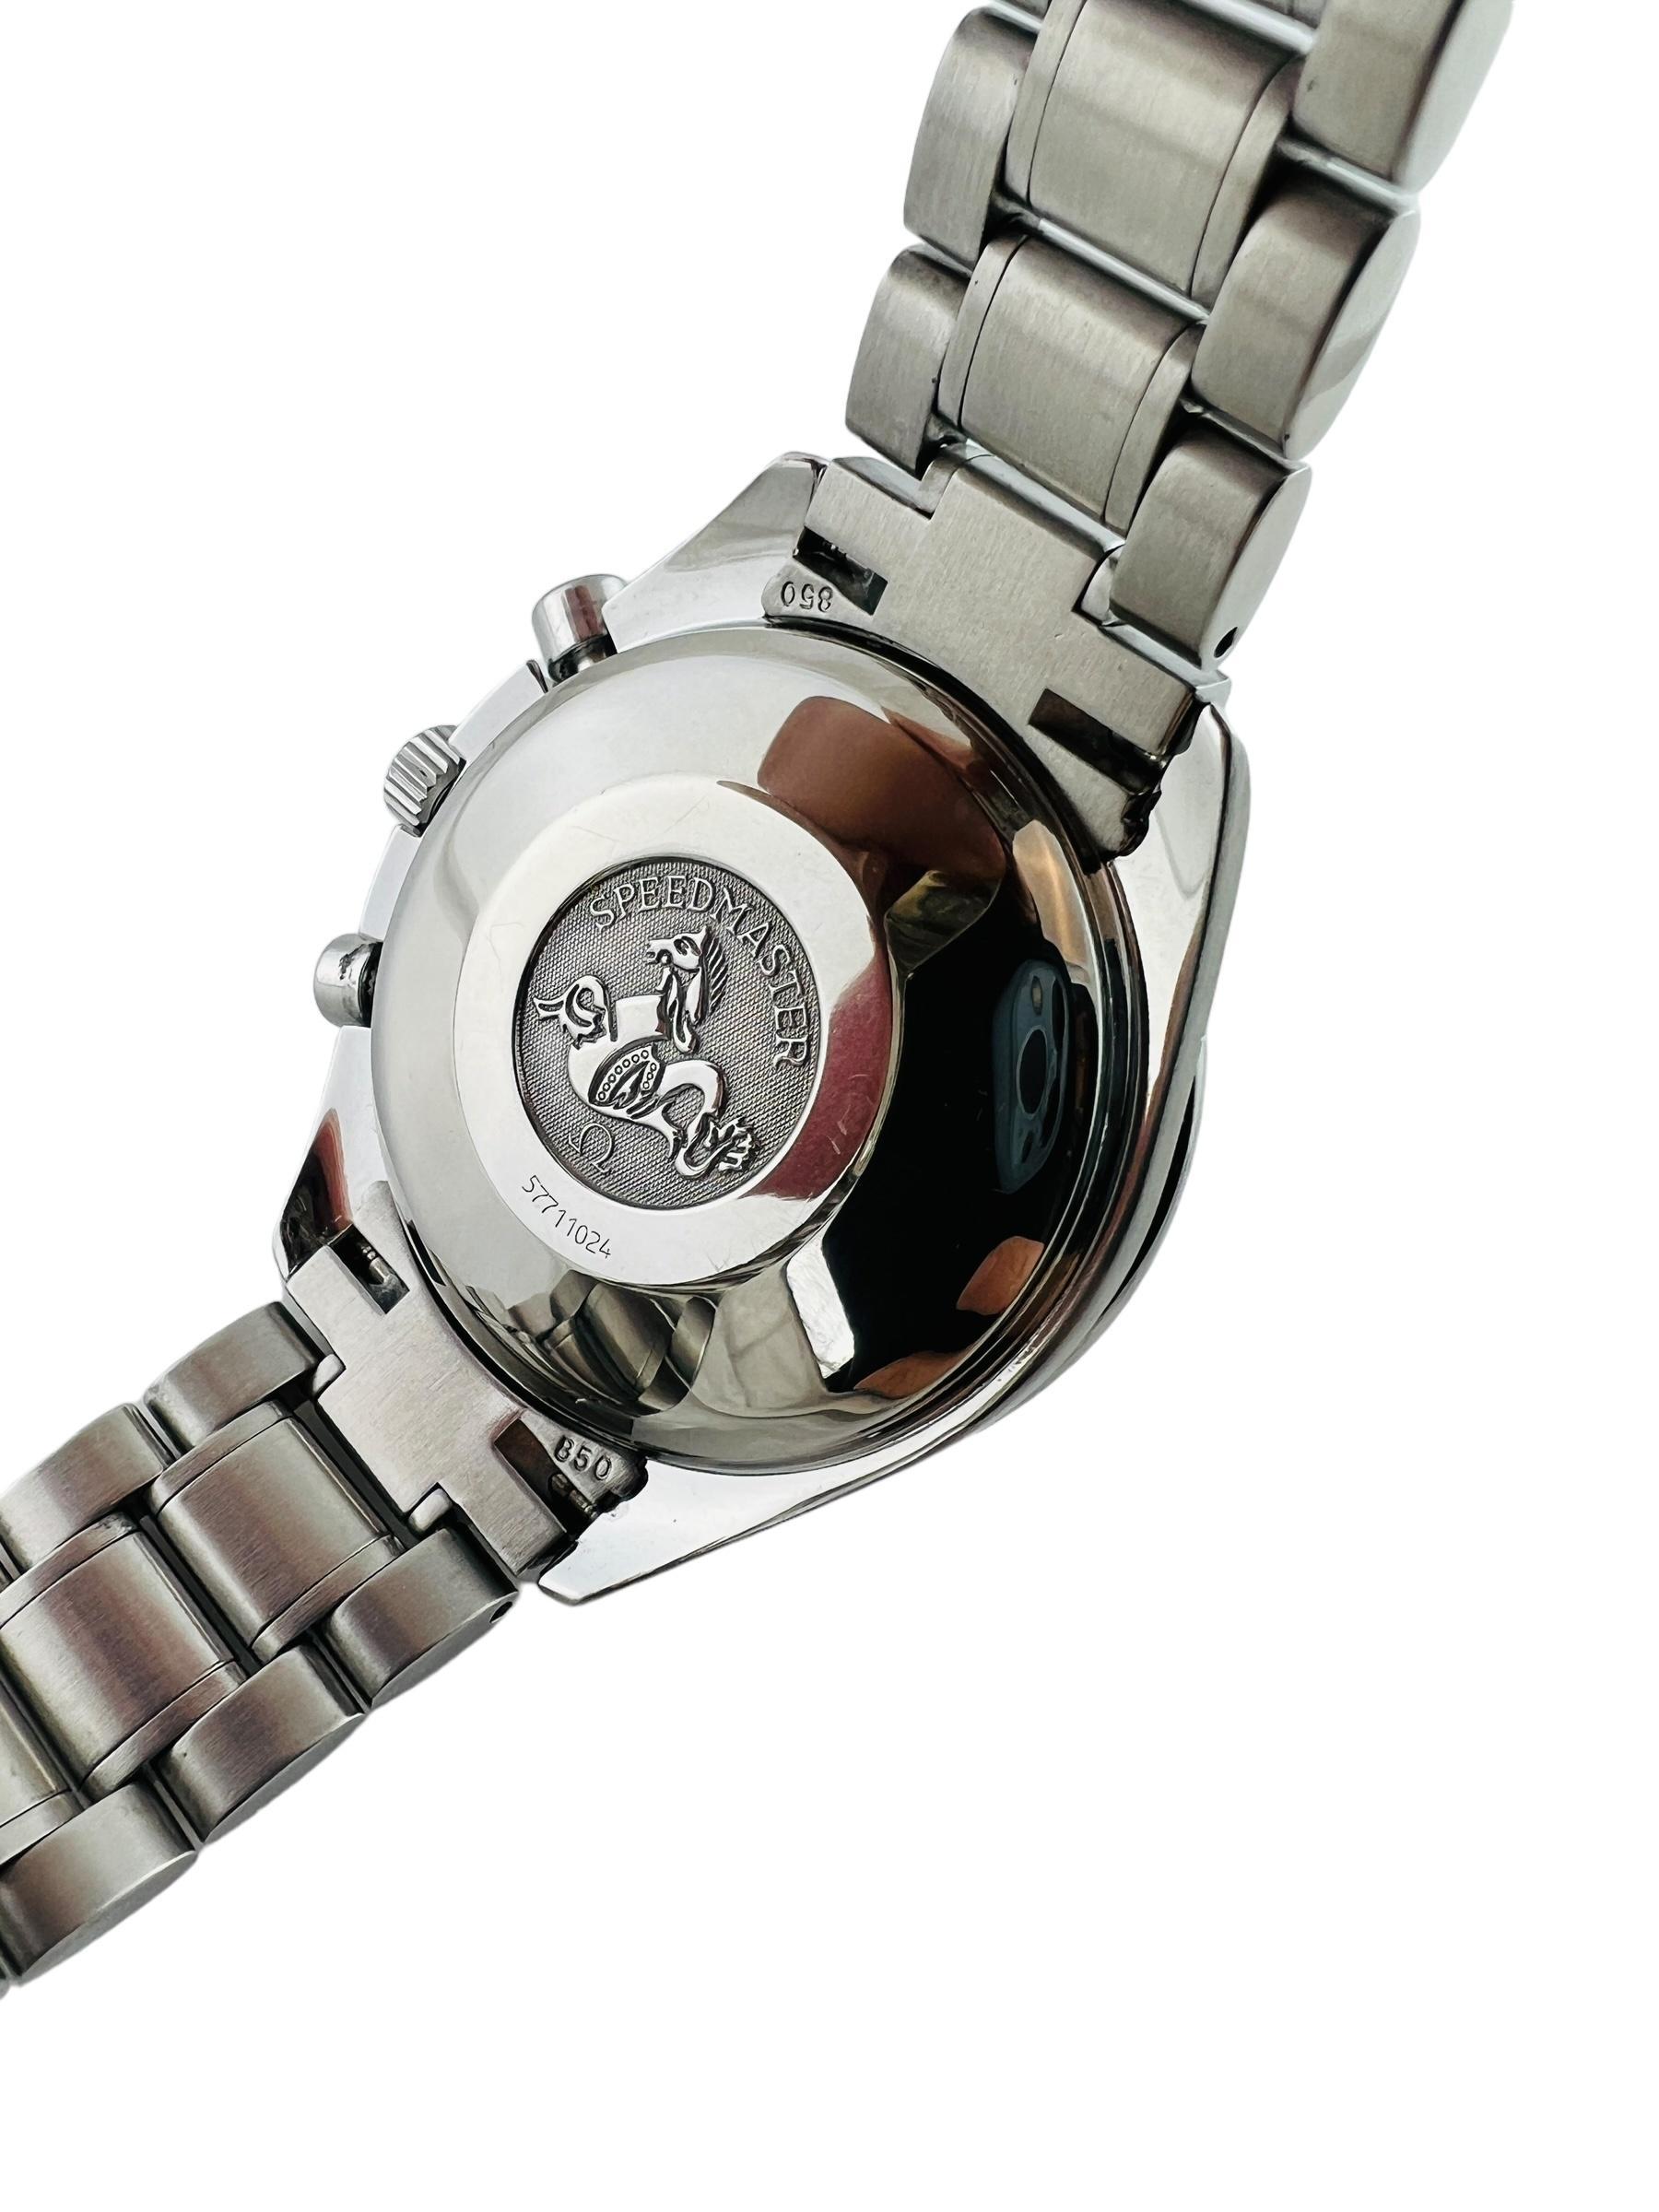 Omega Speedmaster Date Men's Watch 3513.50 Chronograph #16654 6